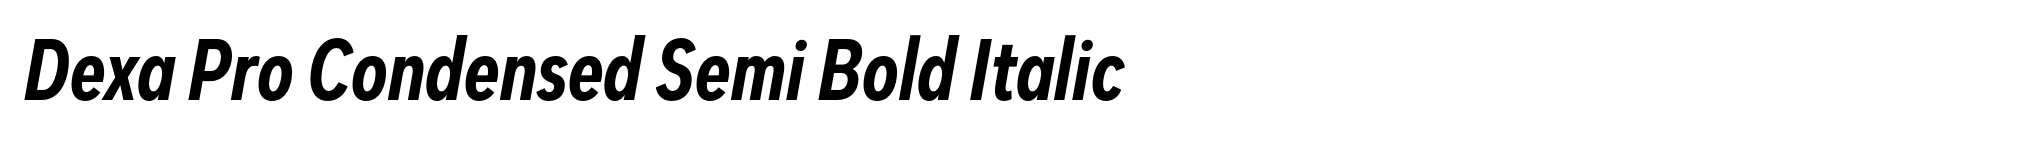 Dexa Pro Condensed Semi Bold Italic image